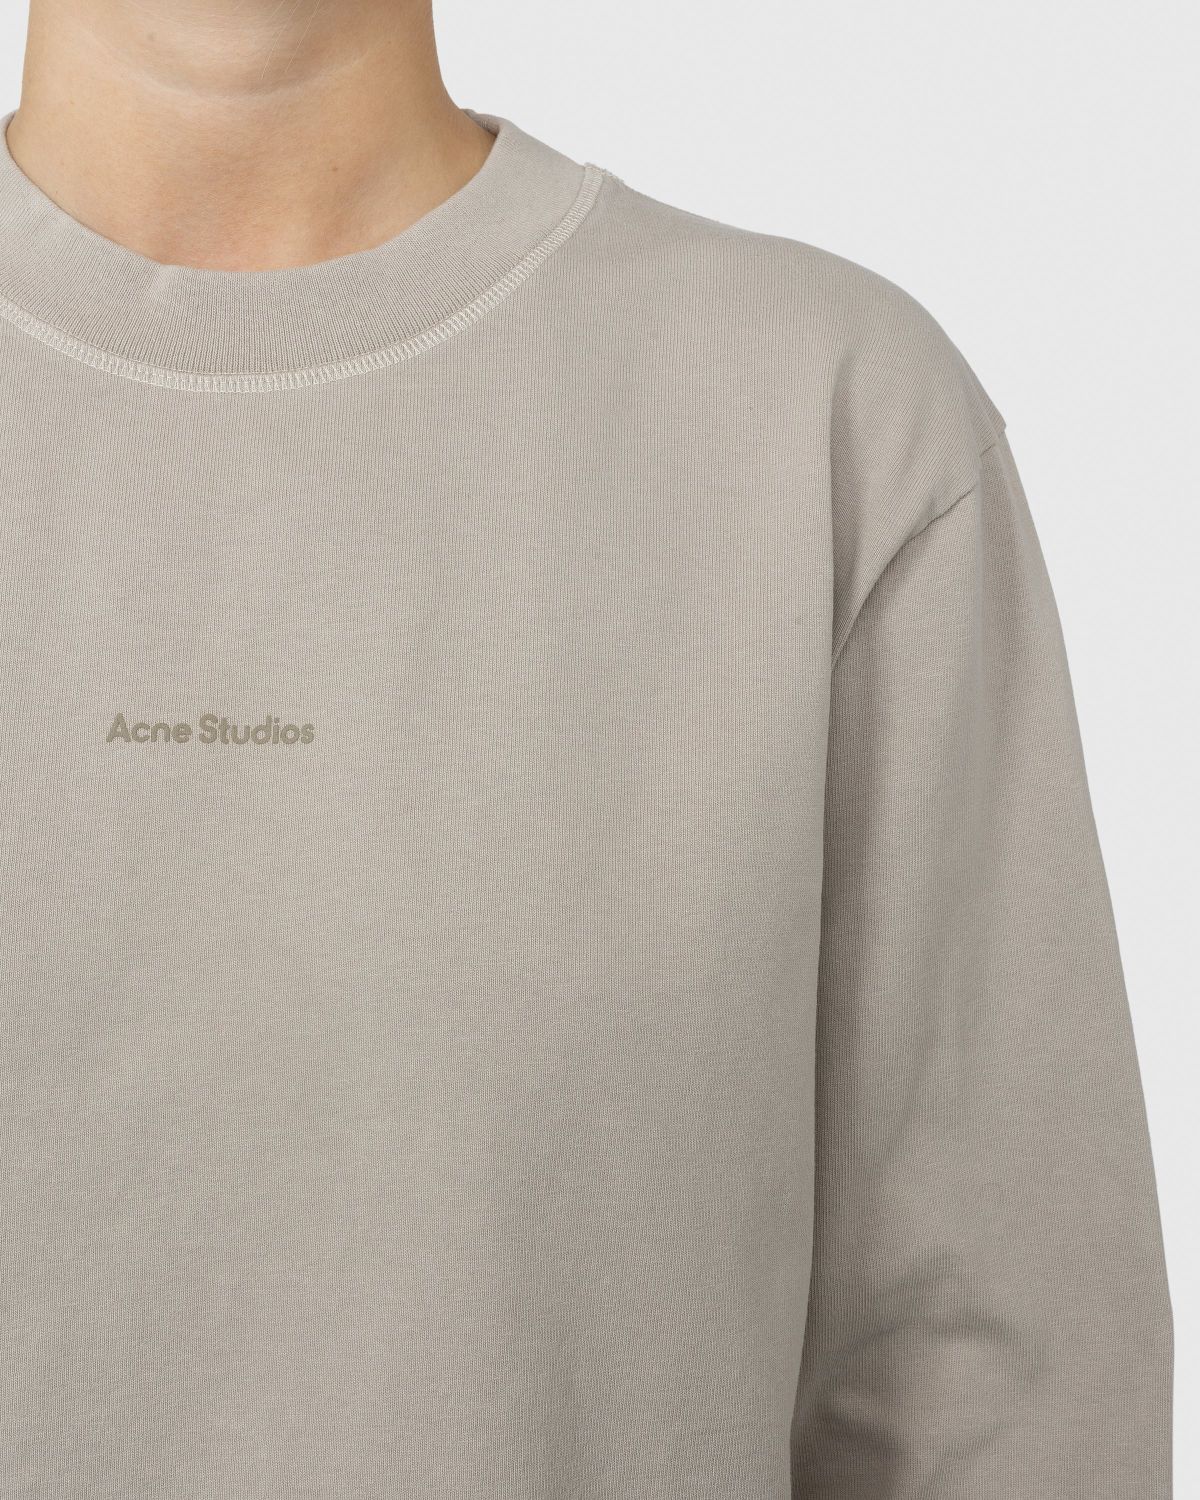 Acne Studios – Organic Cotton Logo Longsleeve Oyster Grey - Longsleeves - Beige - Image 5